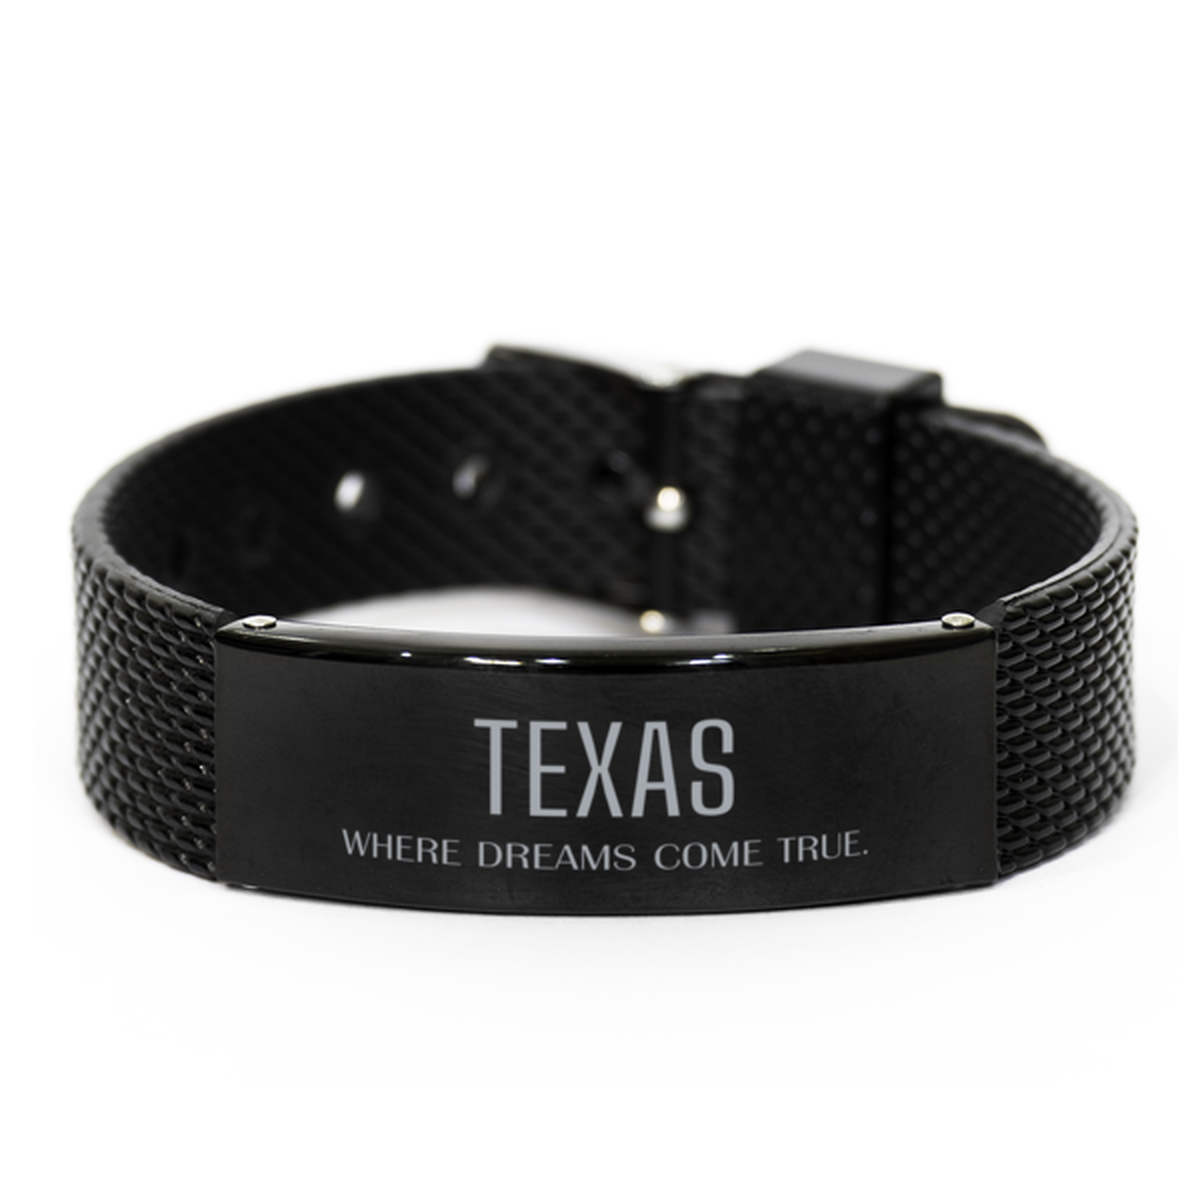 Love Texas State Black Shark Mesh Bracelet, Texas Where dreams come true, Birthday Inspirational Gifts For Texas Men, Women, Friends